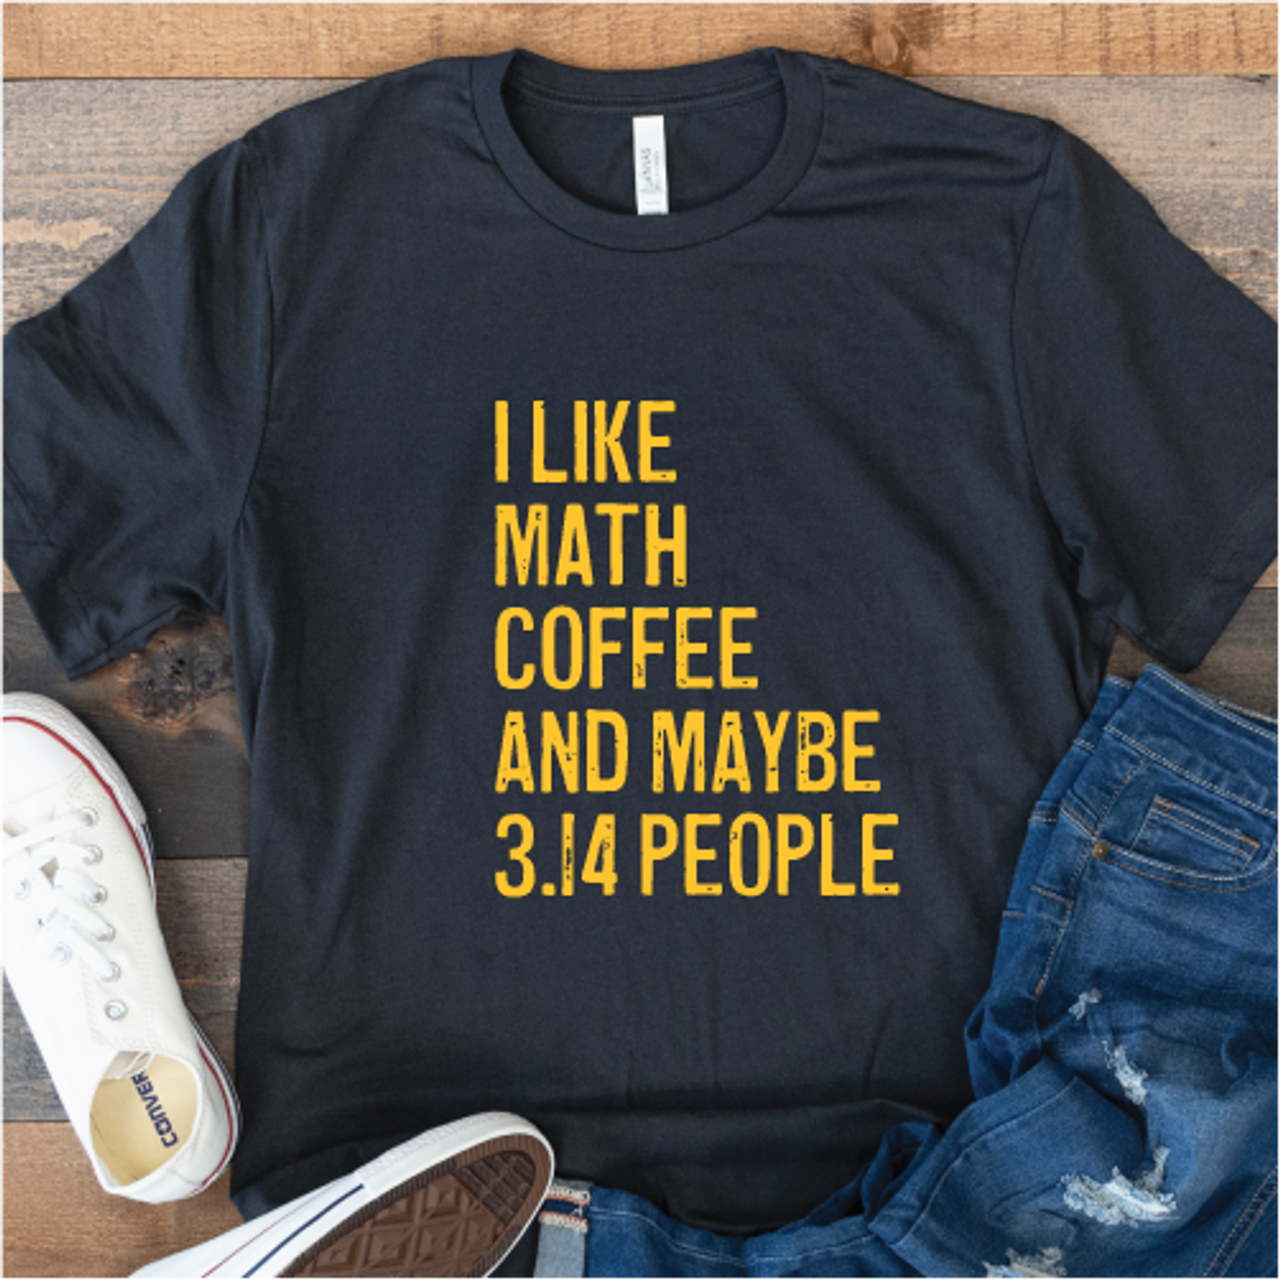 "I Like Math Coffee and Maybe 3.14 People" Shirt